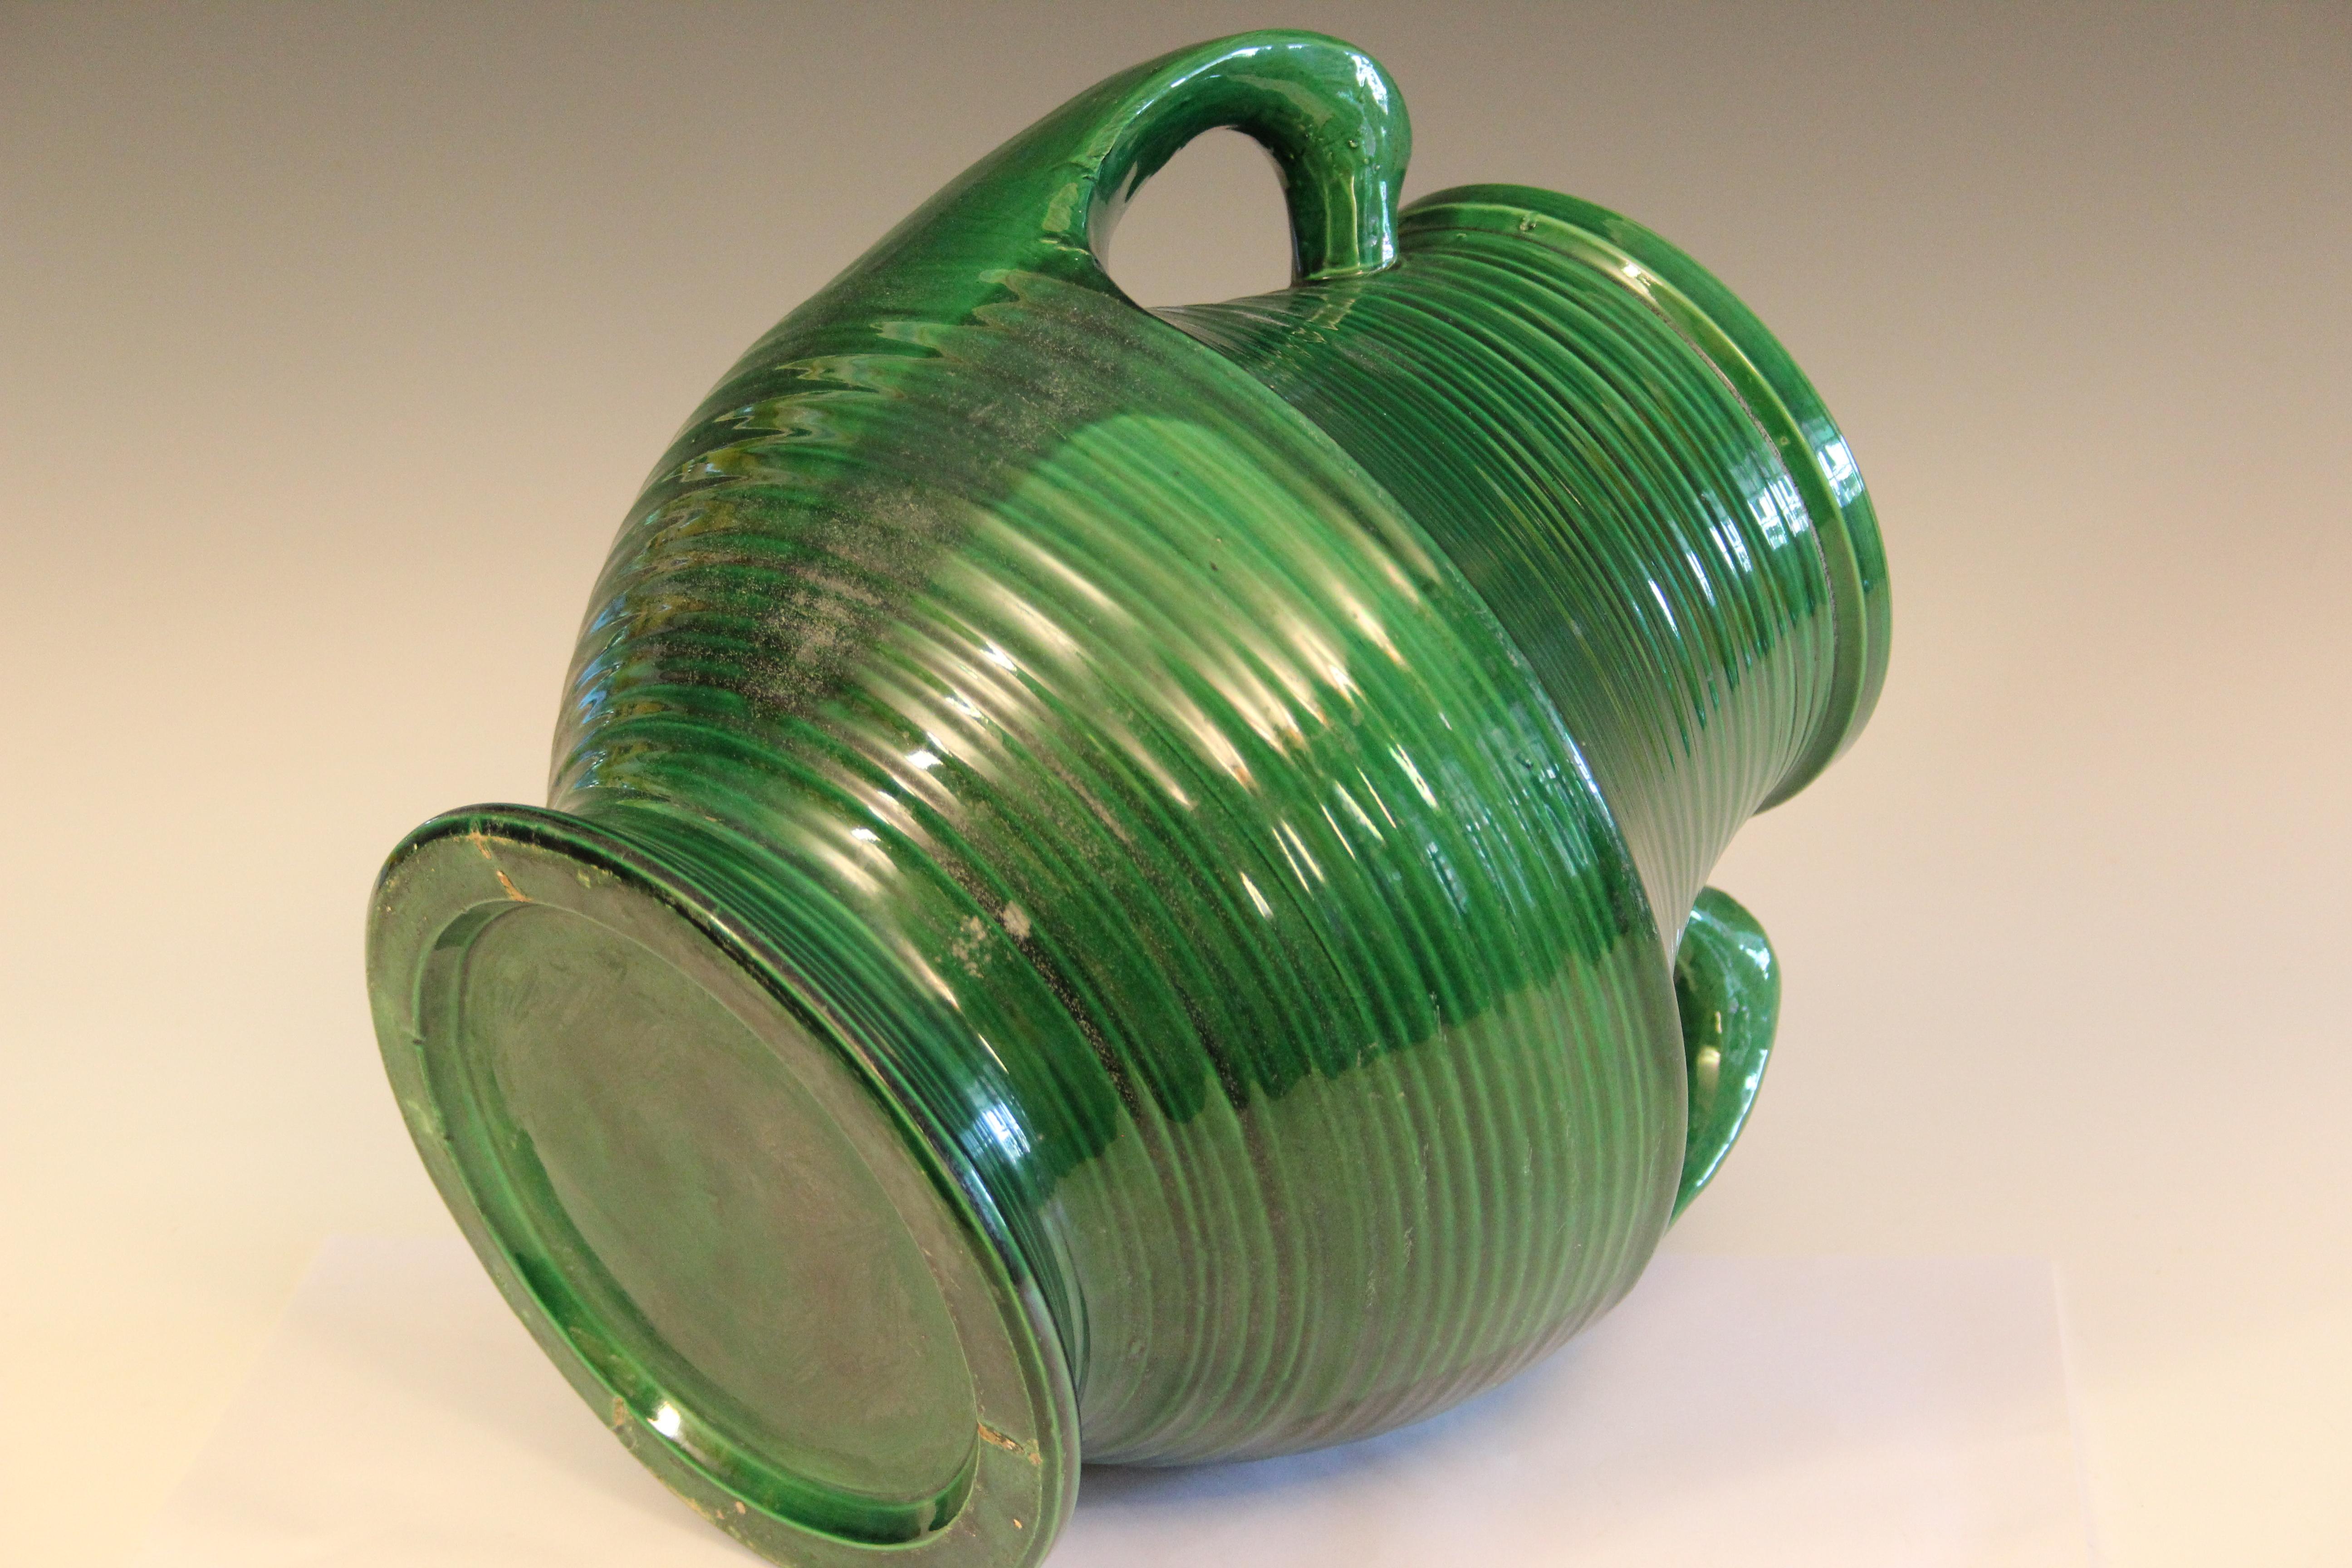 Turned Antique Awaji Pottery Vase Art Deco Swirl Green Large Monochrome Handles For Sale